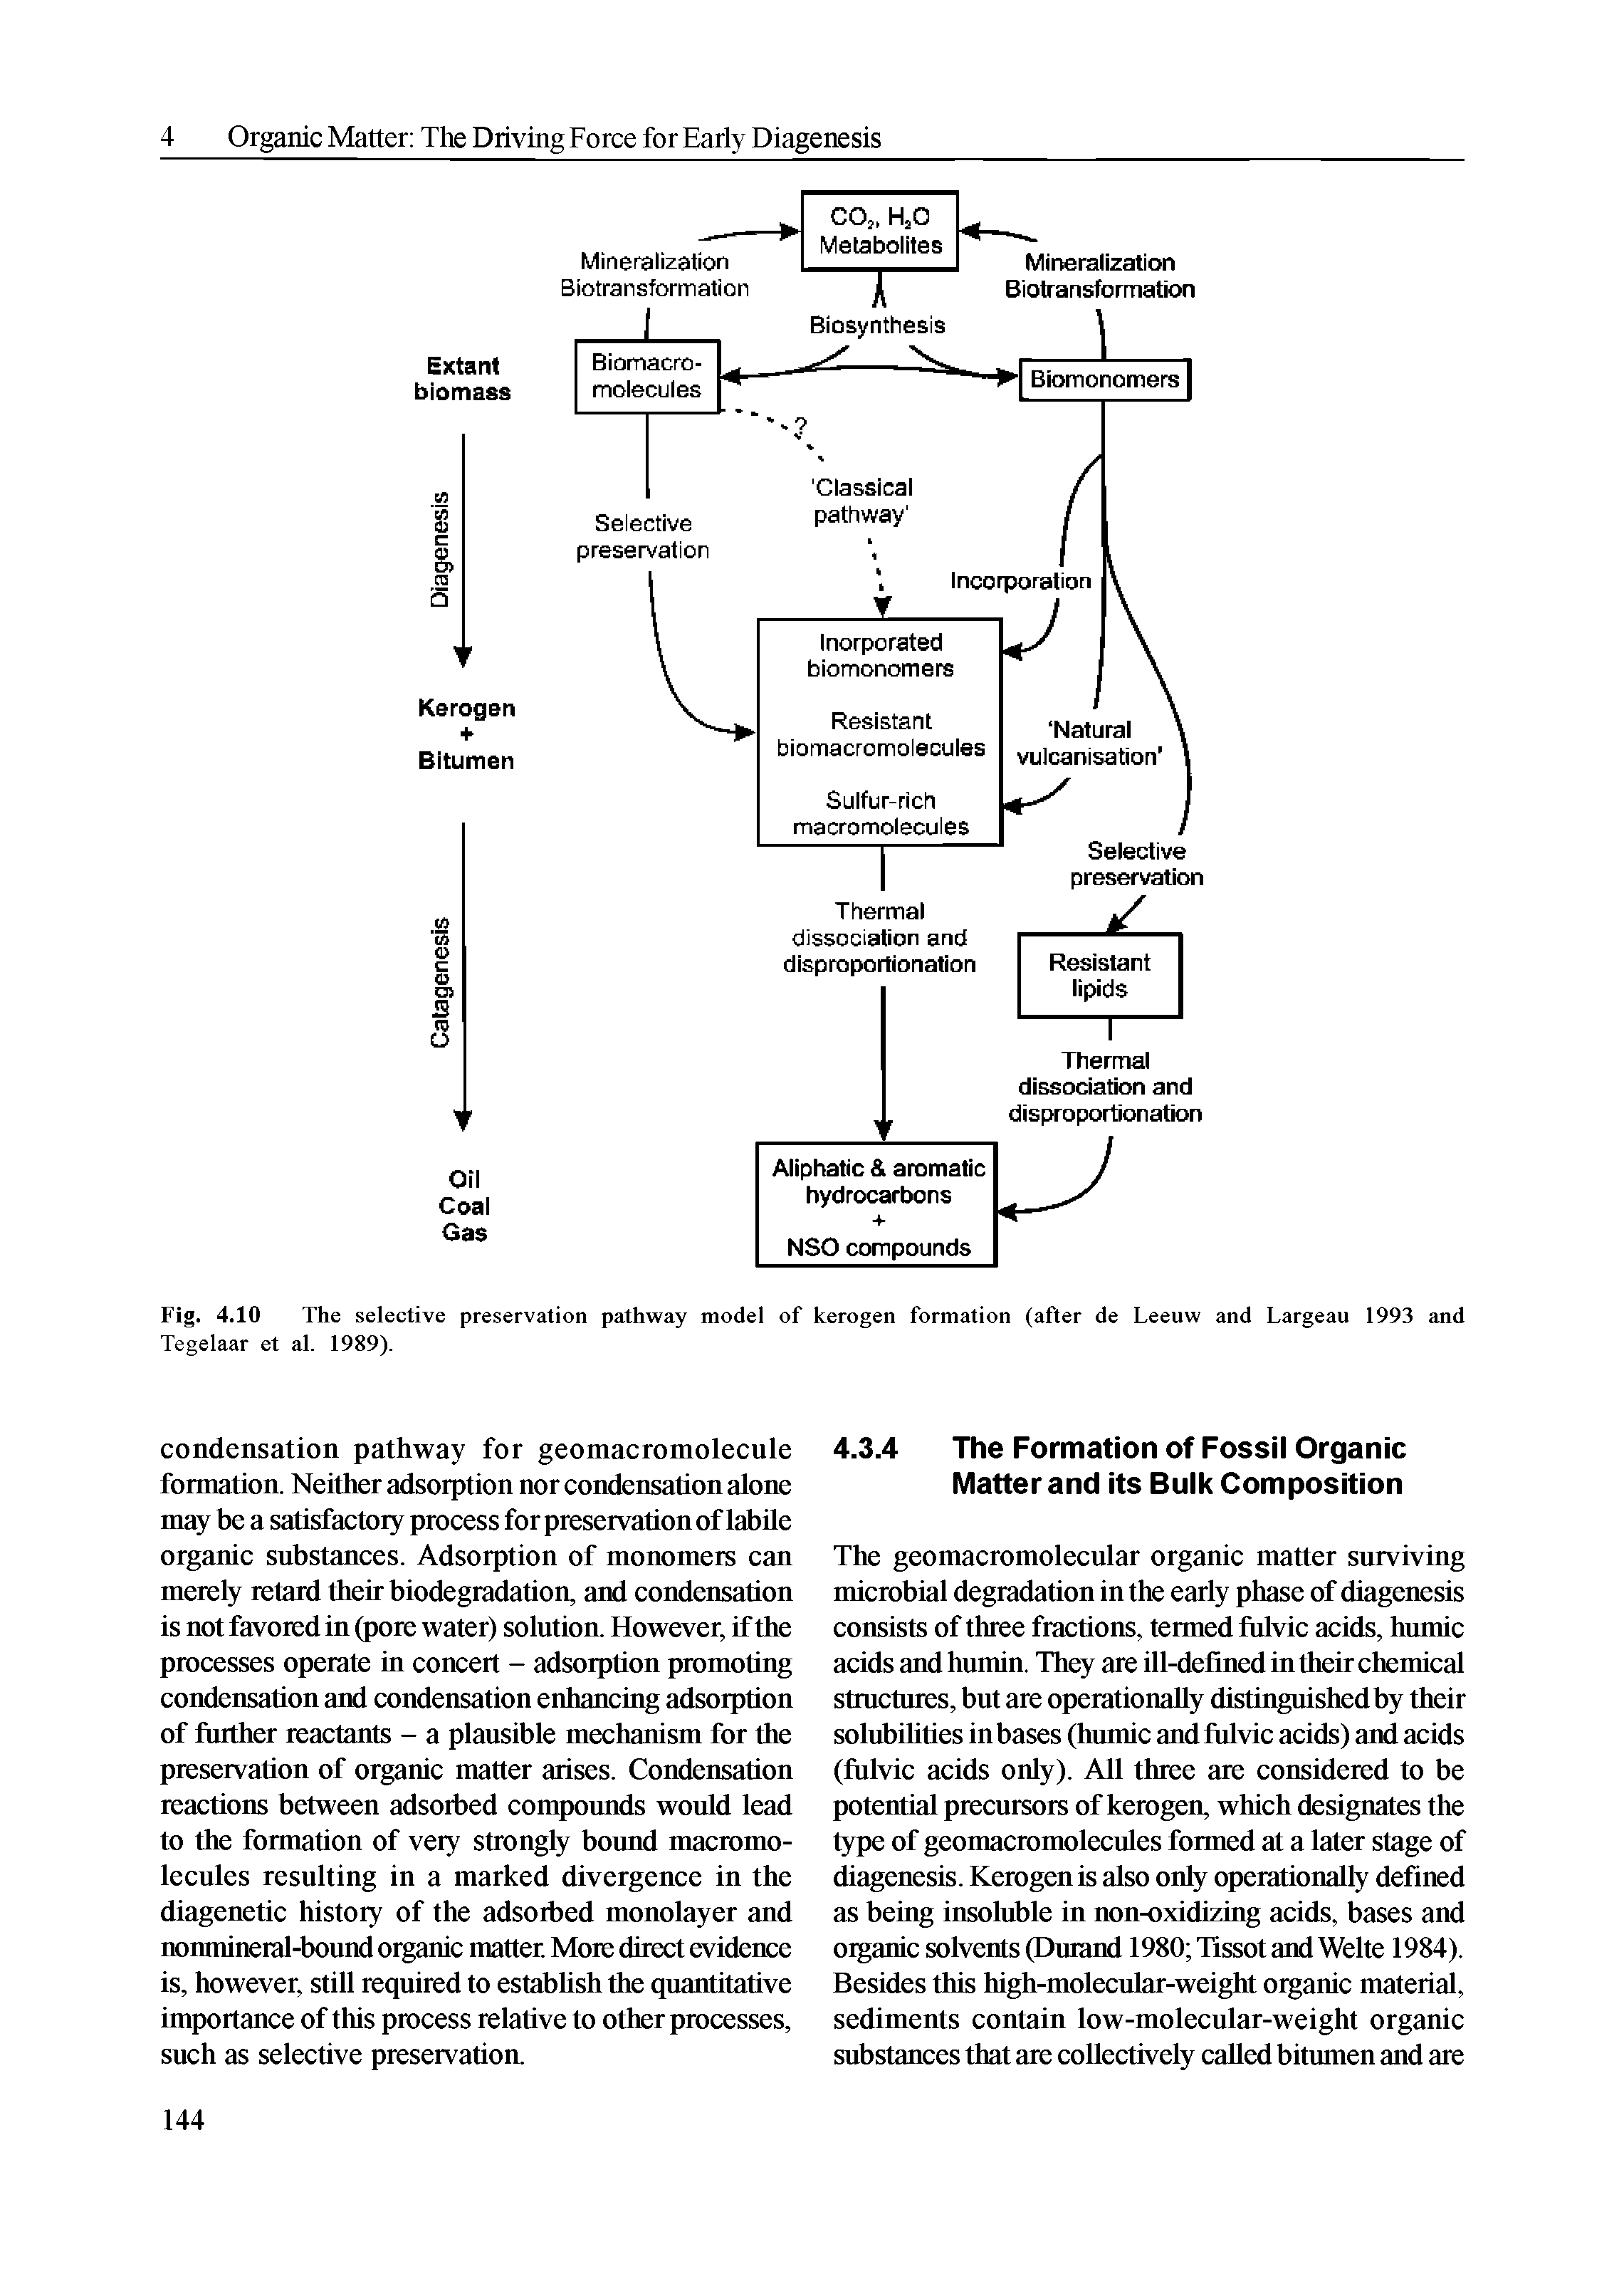 Fig. 4.10 The selective preservation pathway model of kerogen formation (after de Leeuw and Largeau 1993 and Tegelaar et al. 1989).